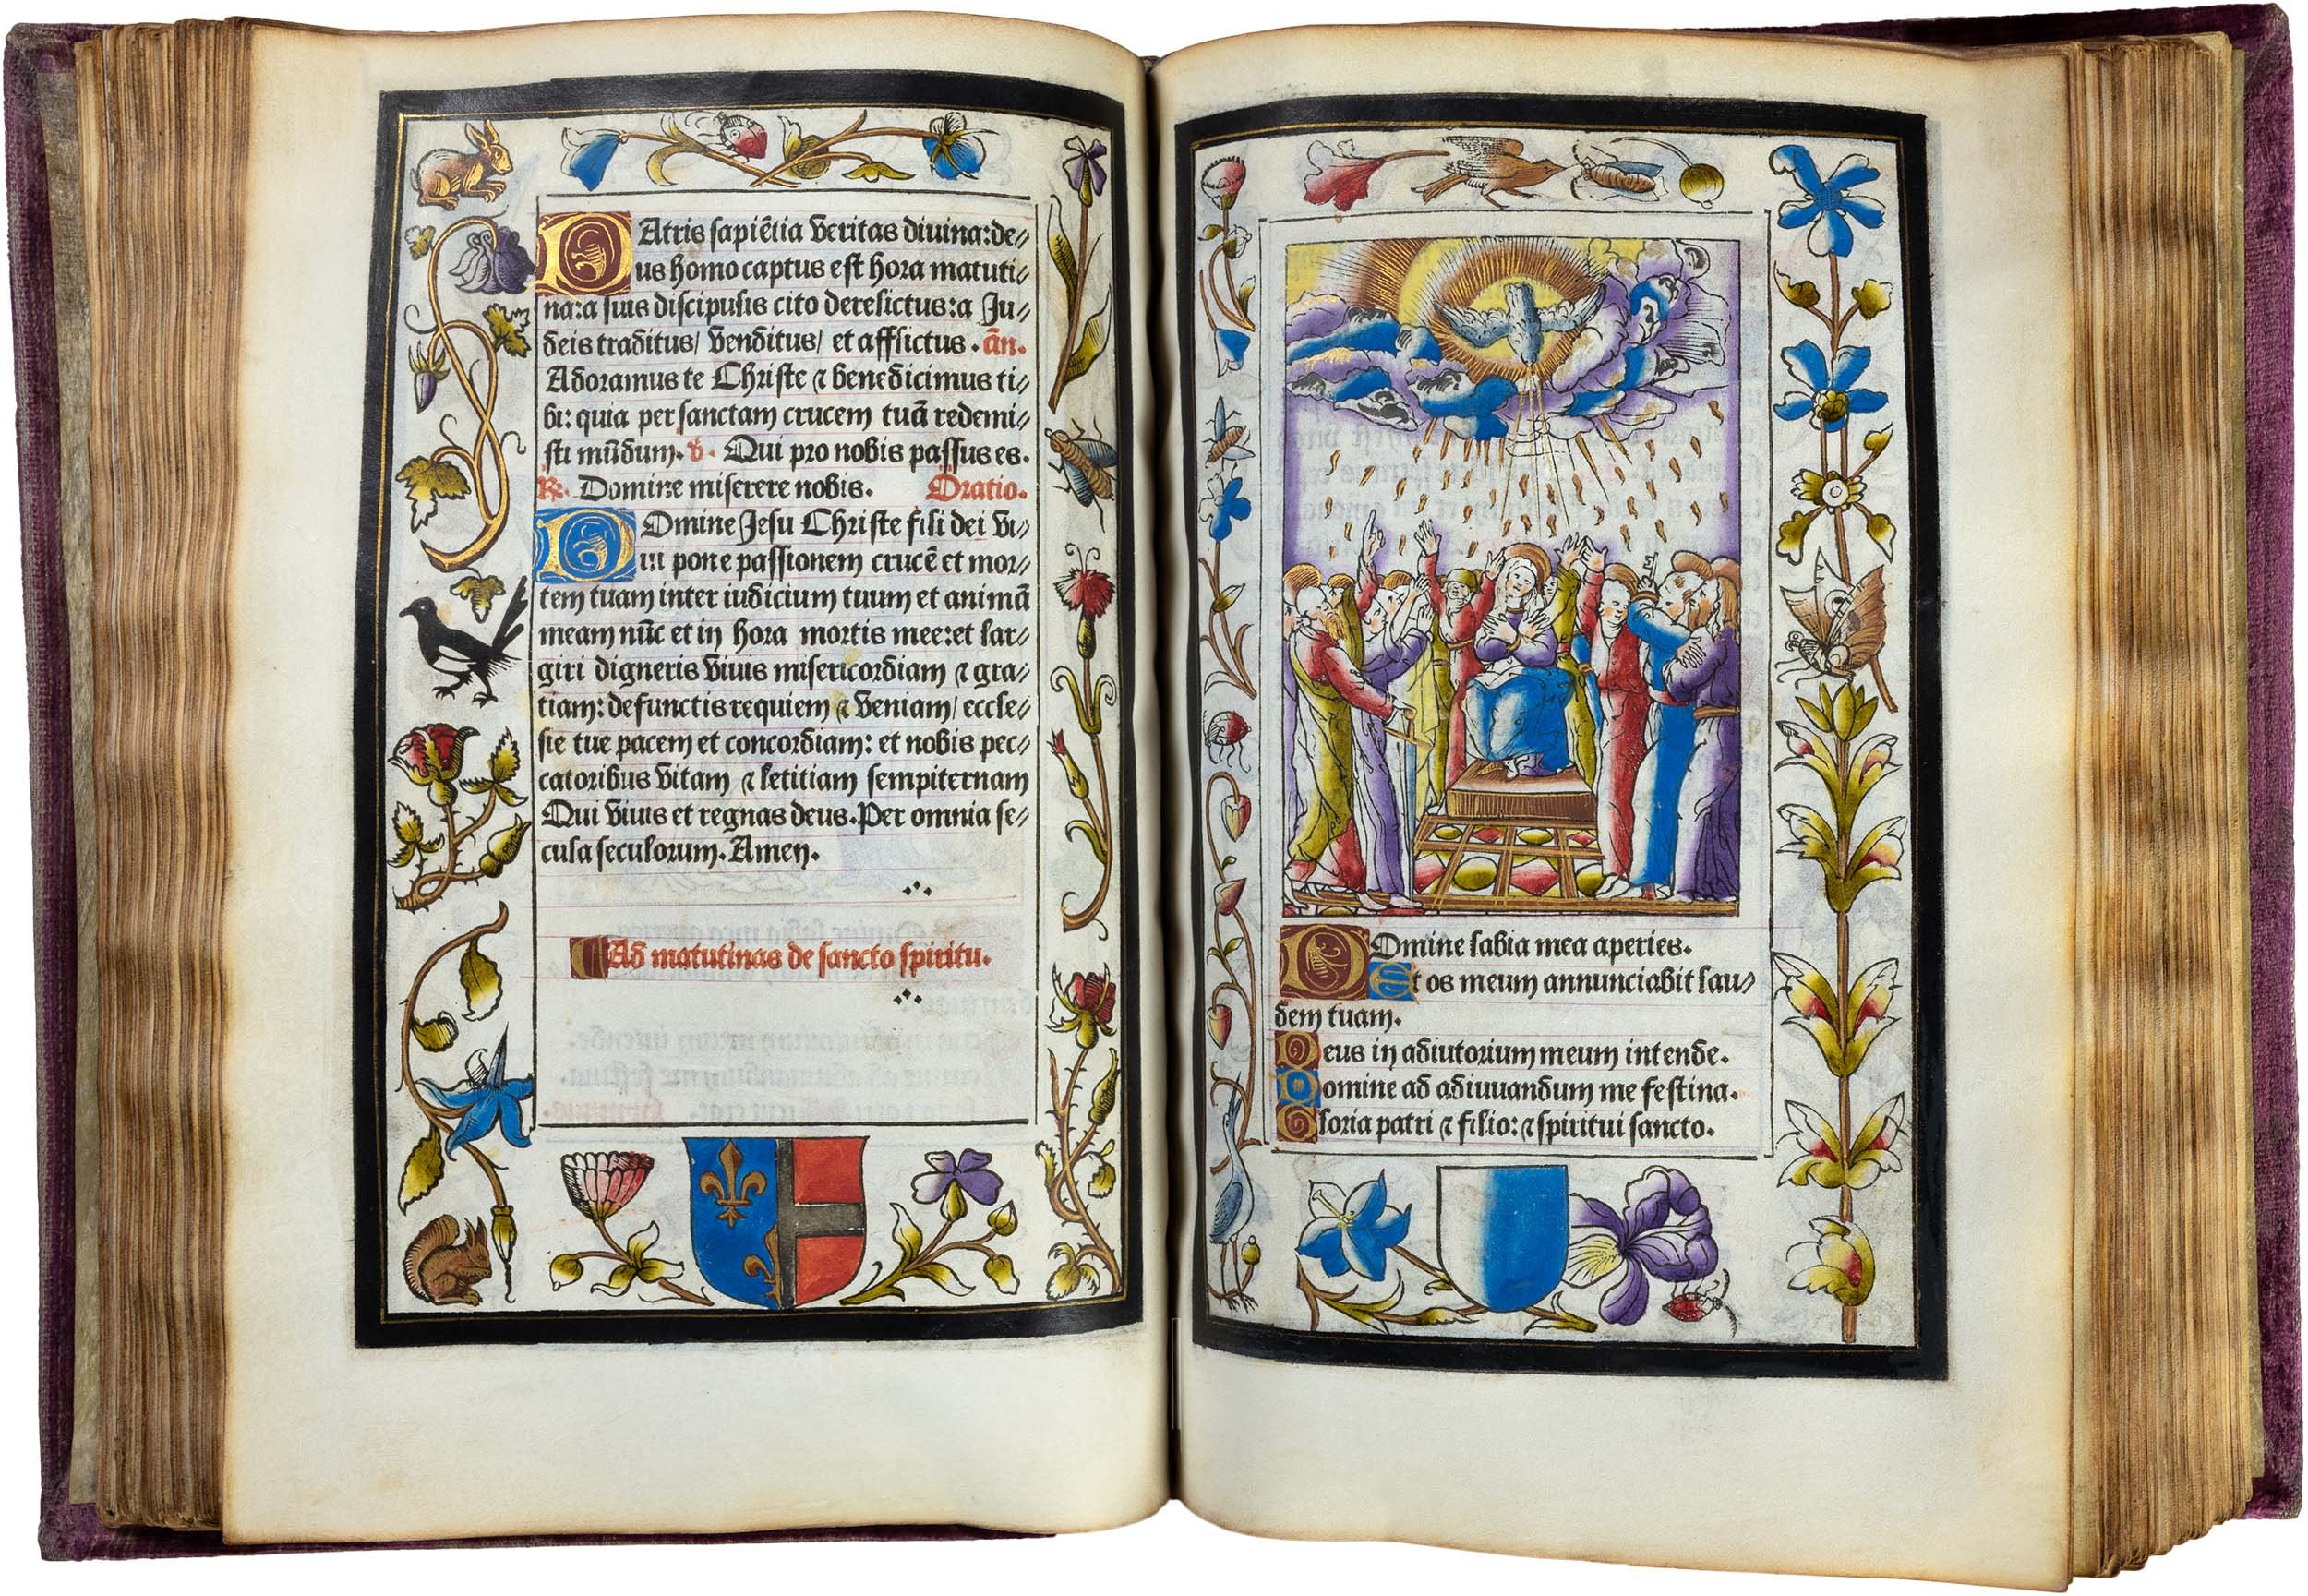 geoffroy-tory-printed-book-of-hours-illuminated-vellum-22-october-1527-prince-dessing-villeneuve-horae-bmv-65.jpg